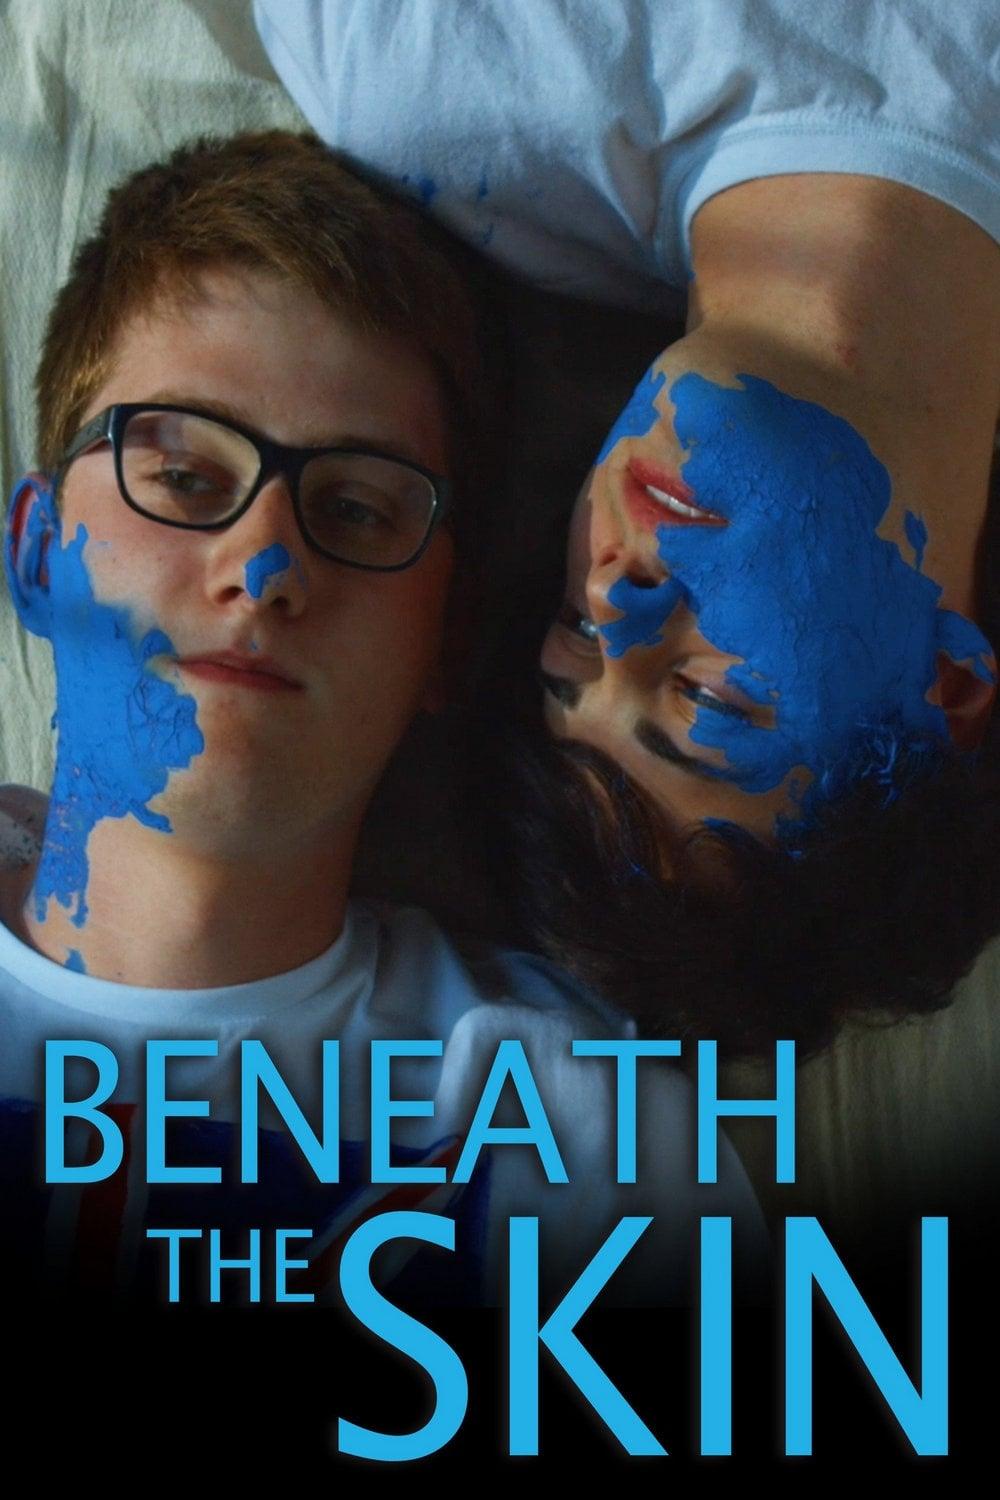 Beneath the Skin poster